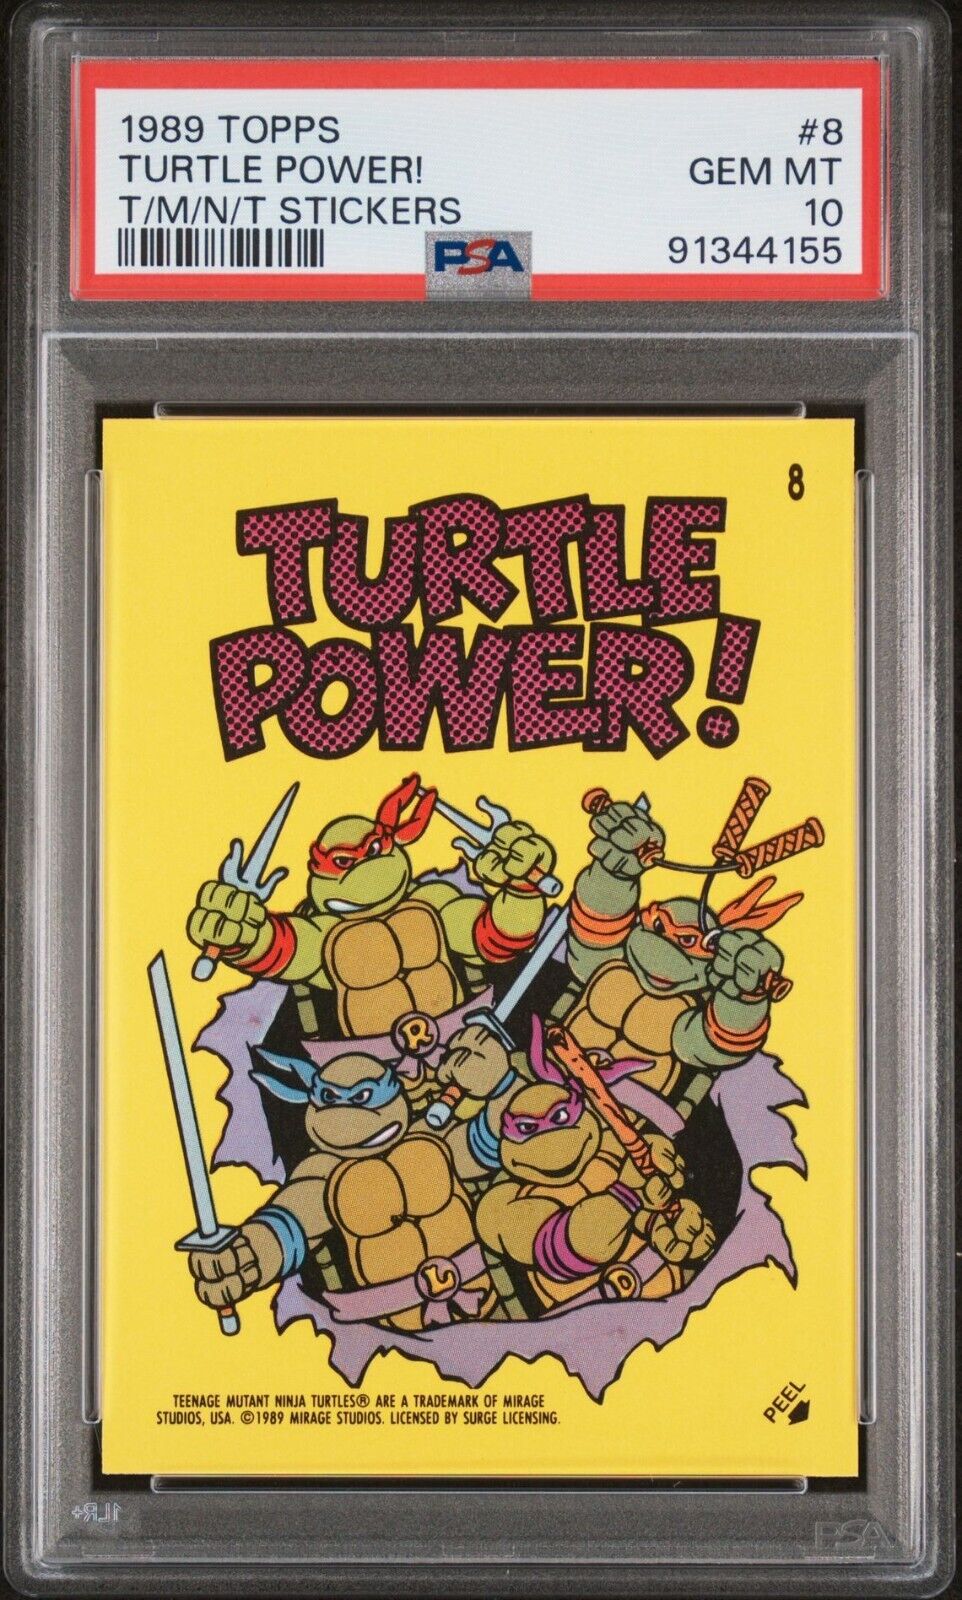 1989 Topps TMNT Ninja Turtles #8 Turtle Power Sticker Card PSA 10